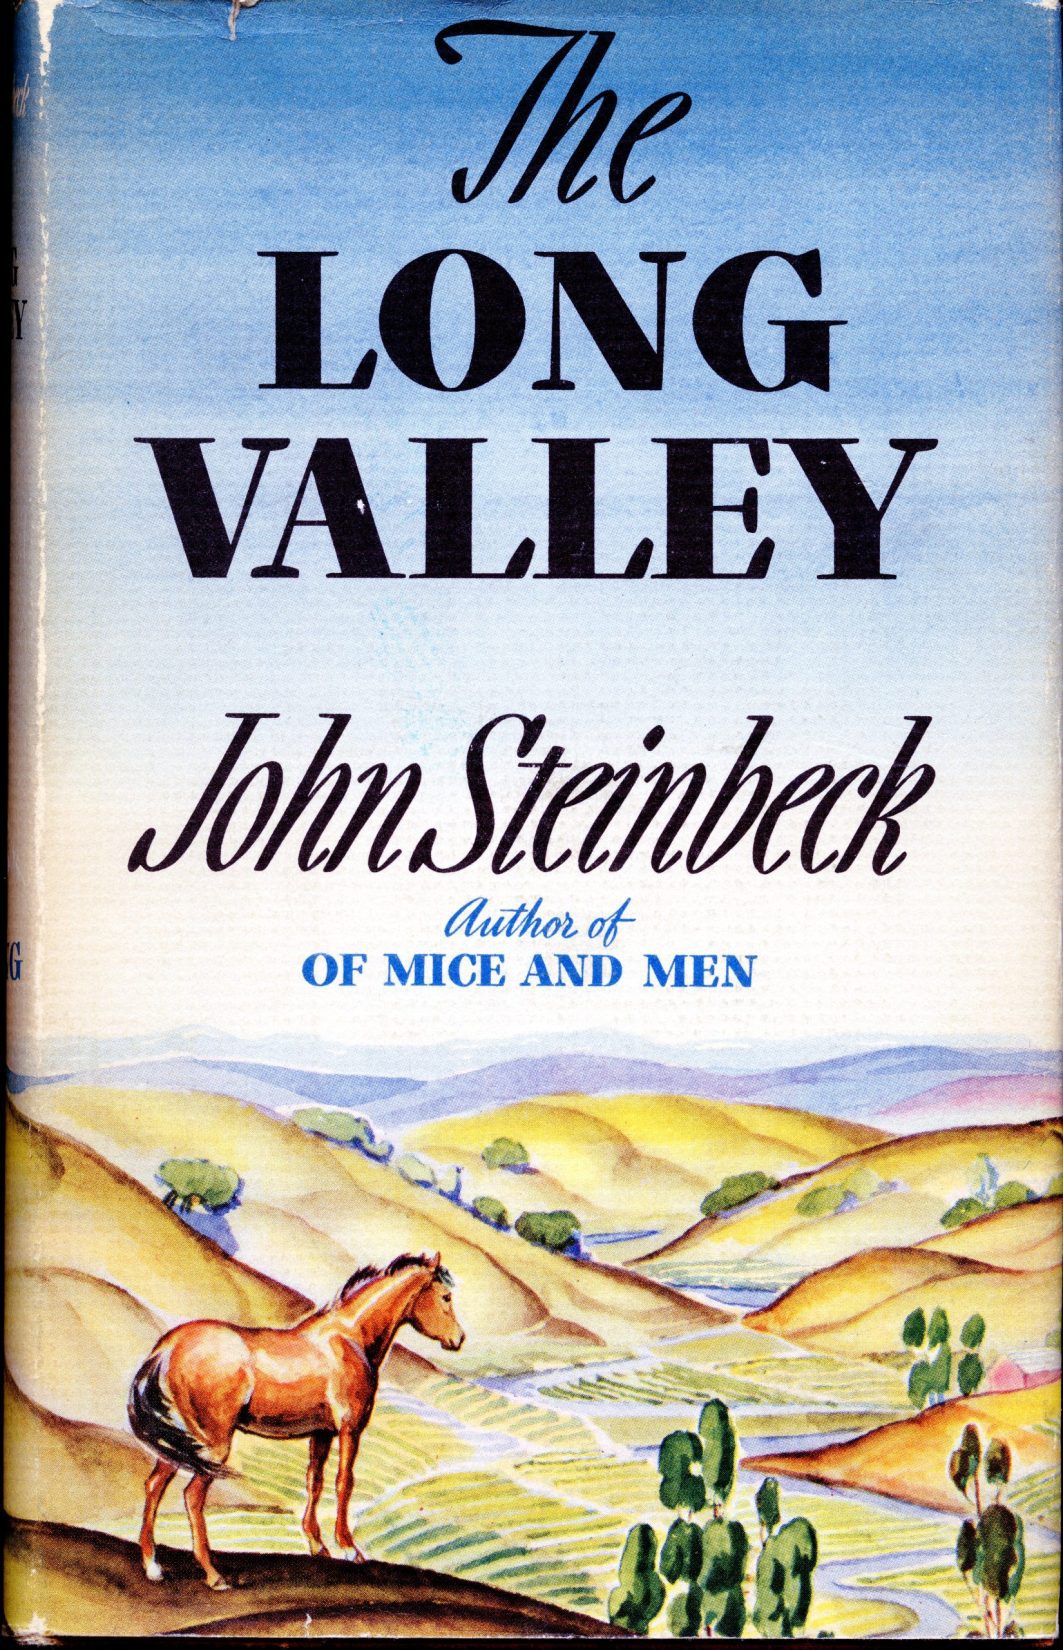 The Long Valley John Steinbeck